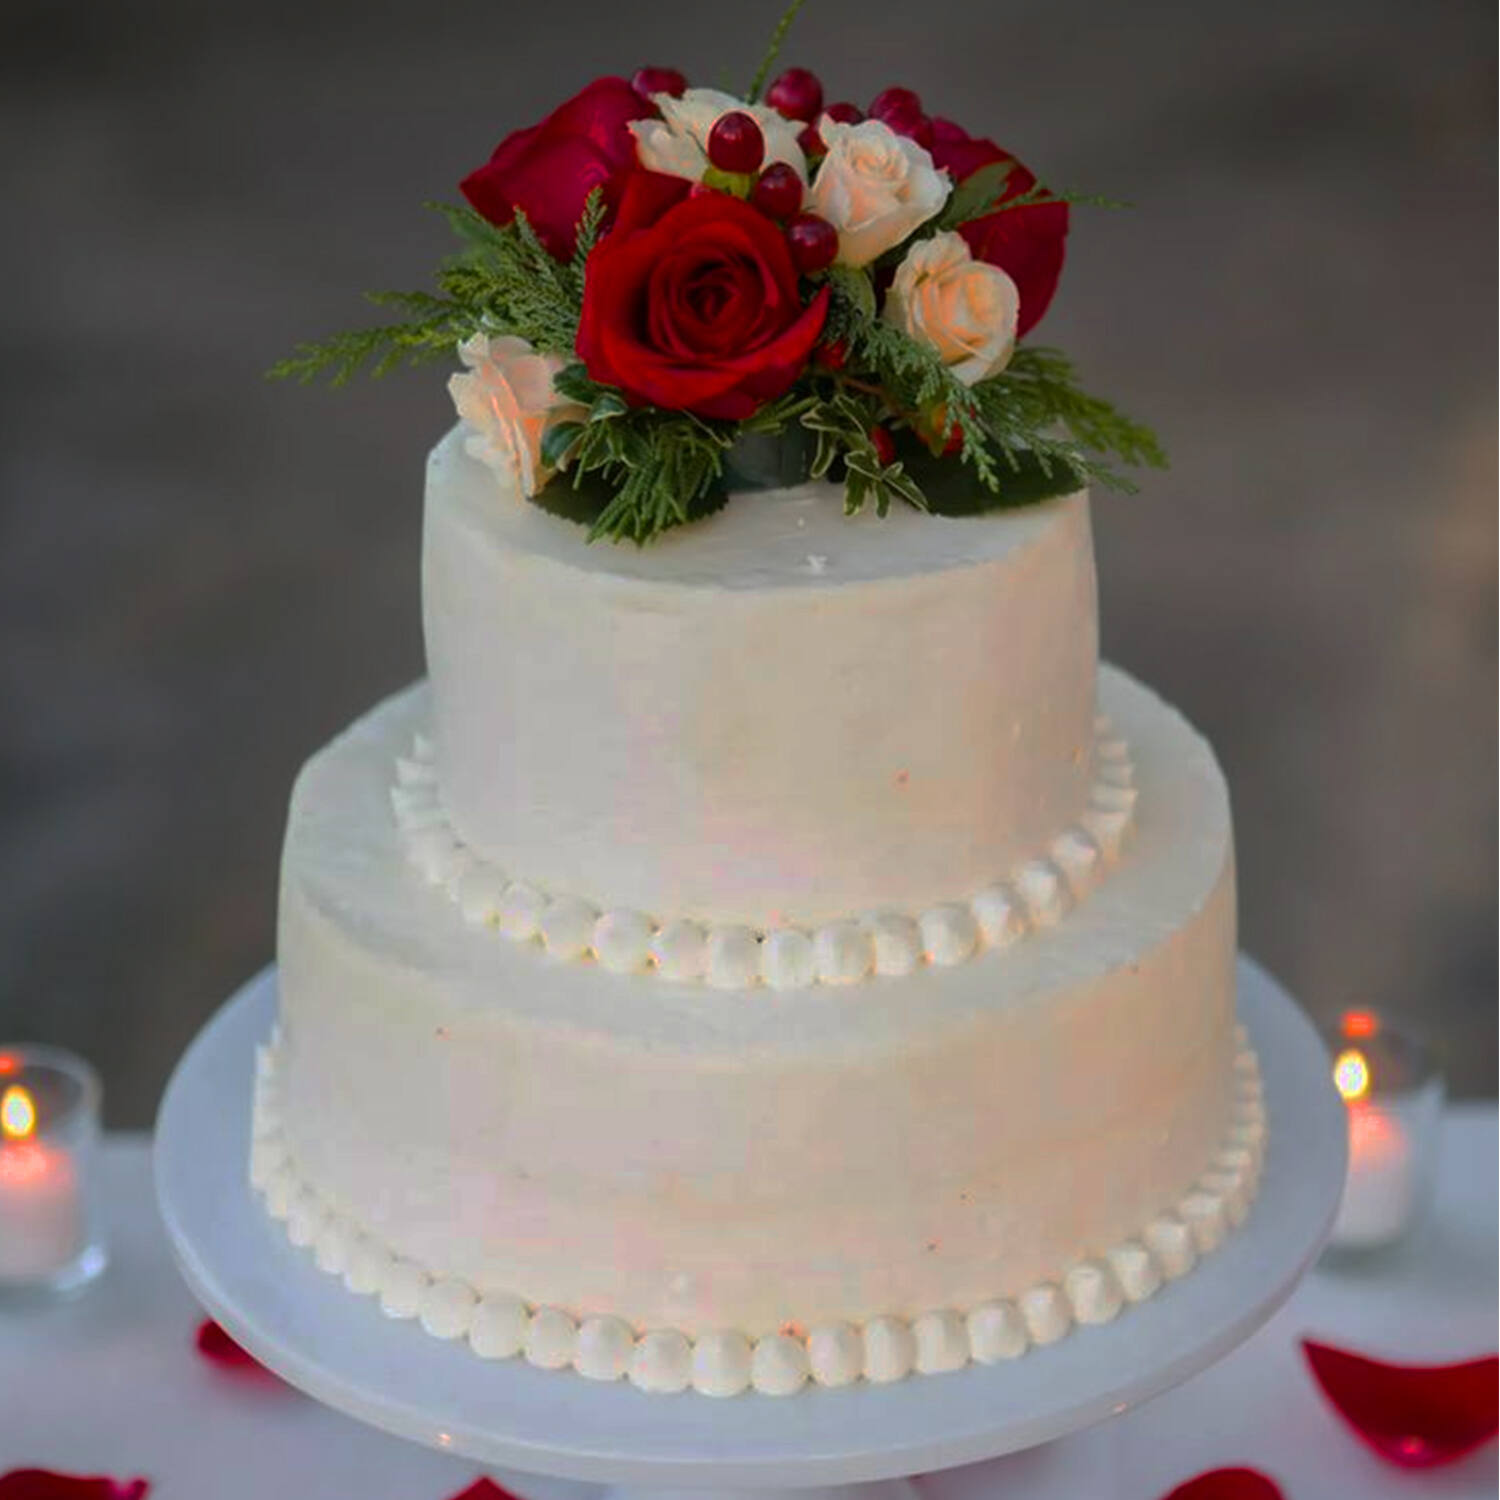 5 Stunning Chocolate Wedding Cakes - Paperblog | Chocolate wedding cake,  Rose cake, Chocolate cake designs